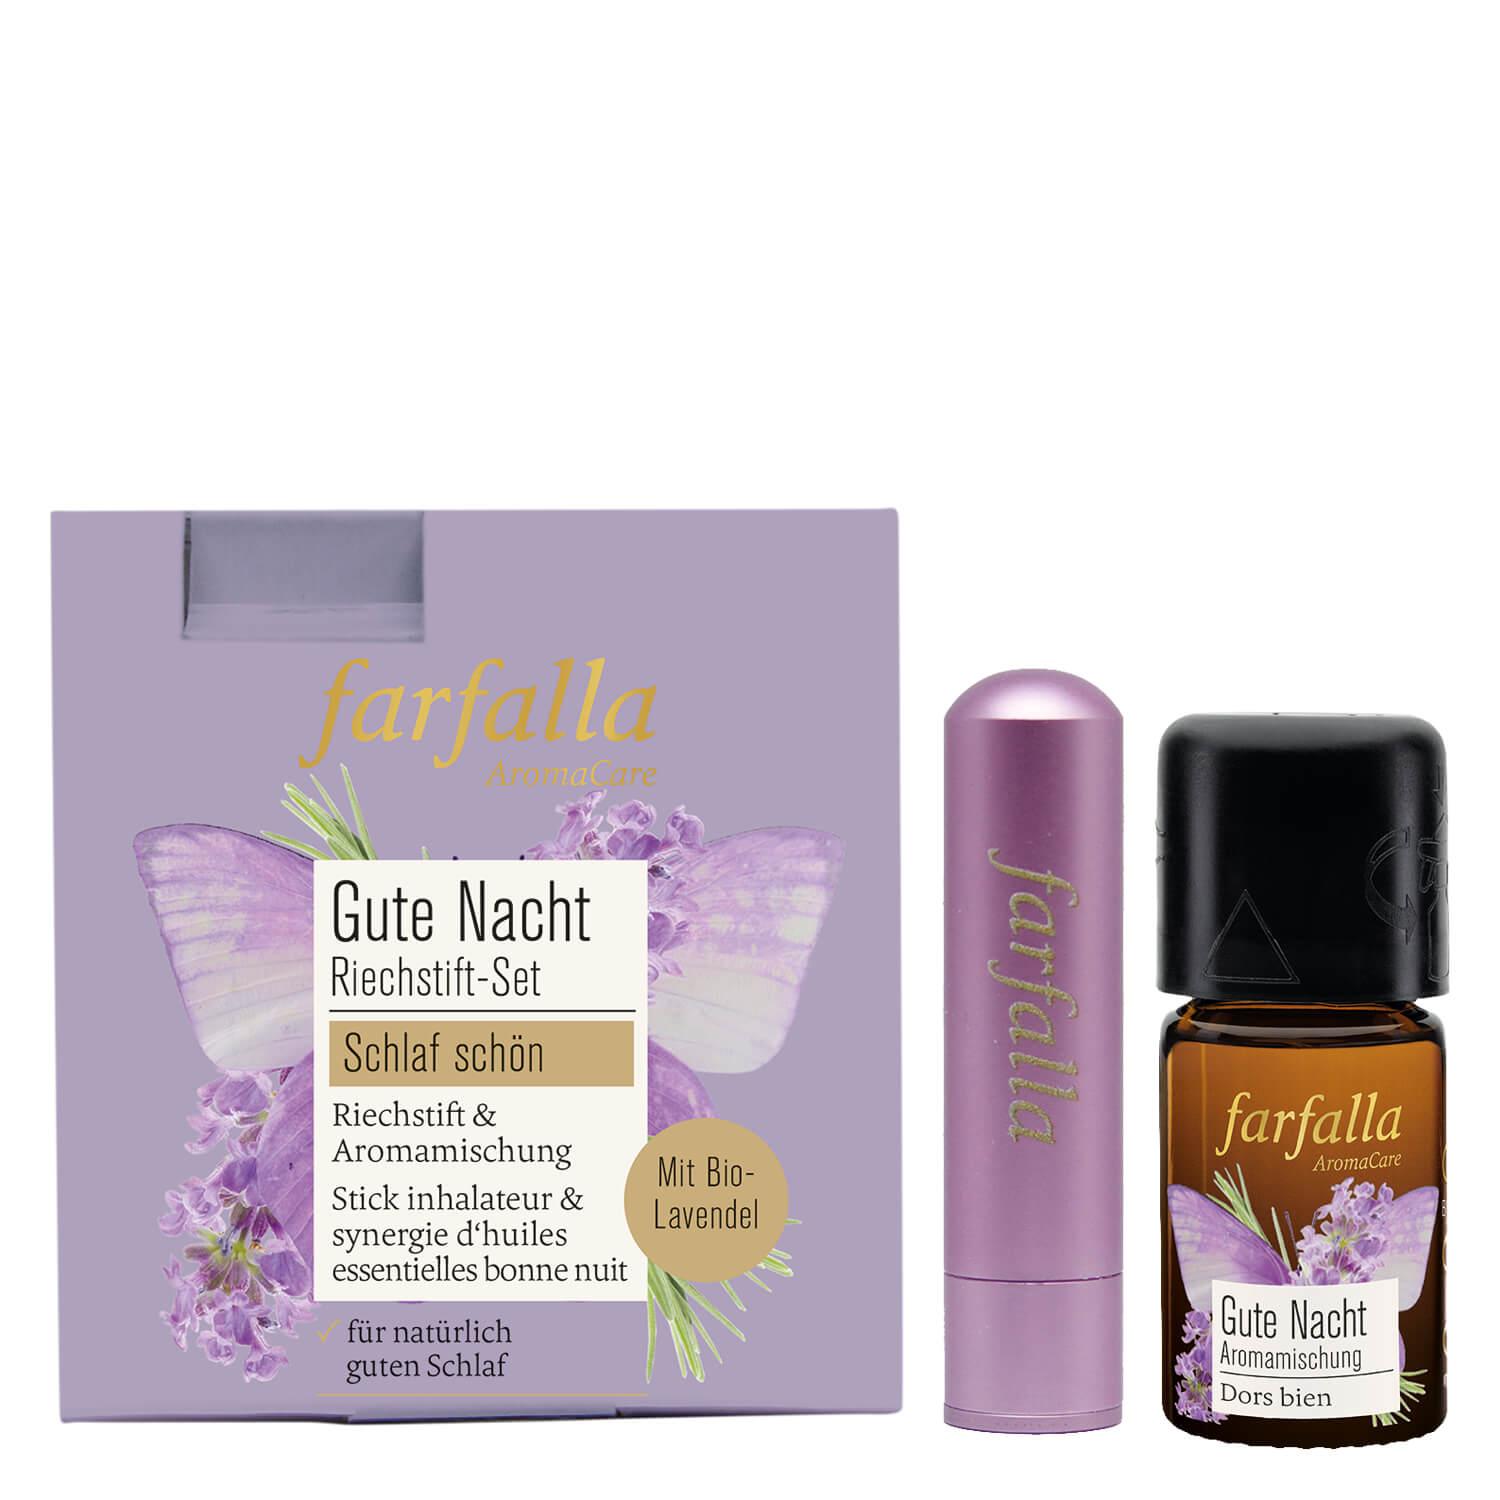 Farfalla Sets - Good night fragrance set